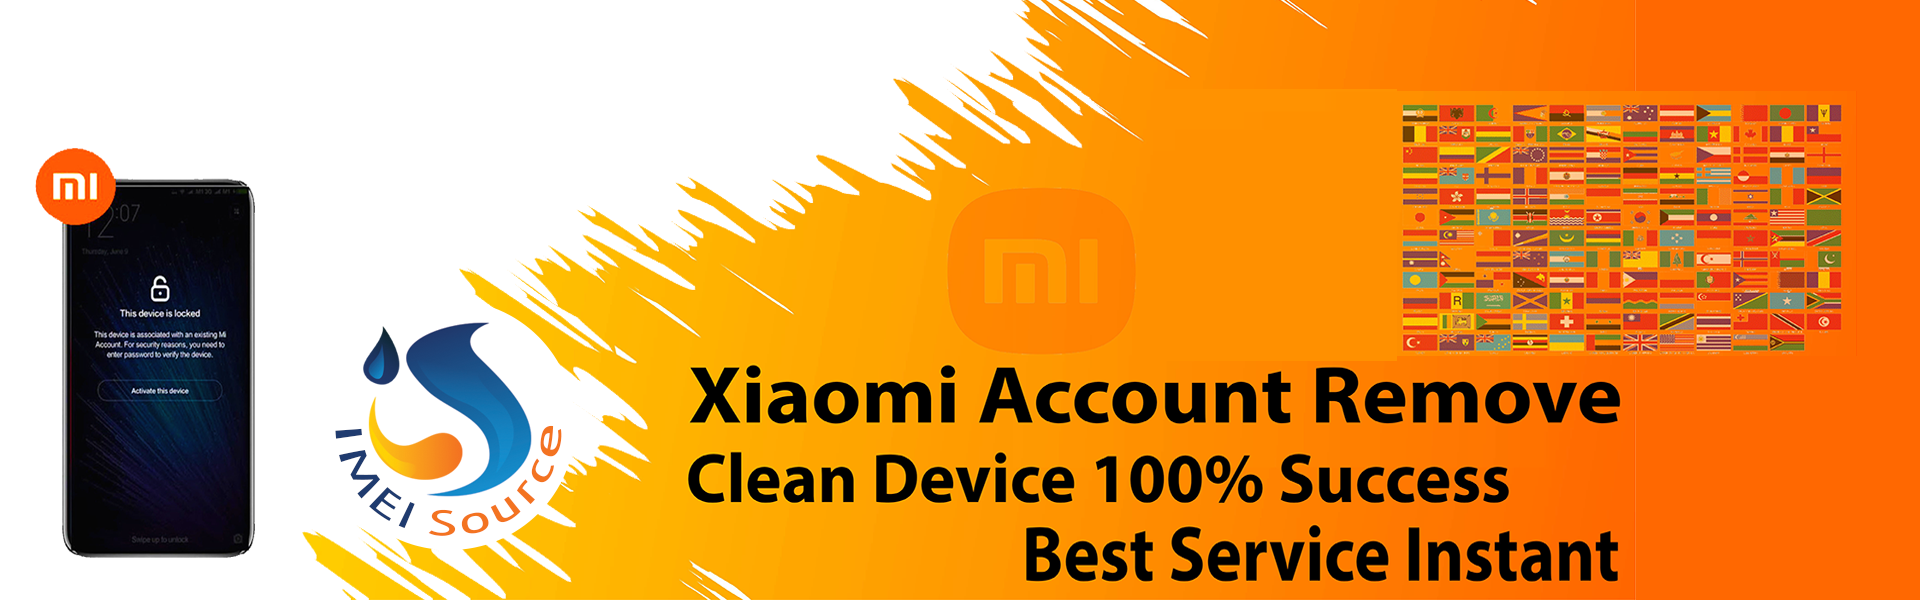 XIAOMI Account Remove Worldwide Unlock